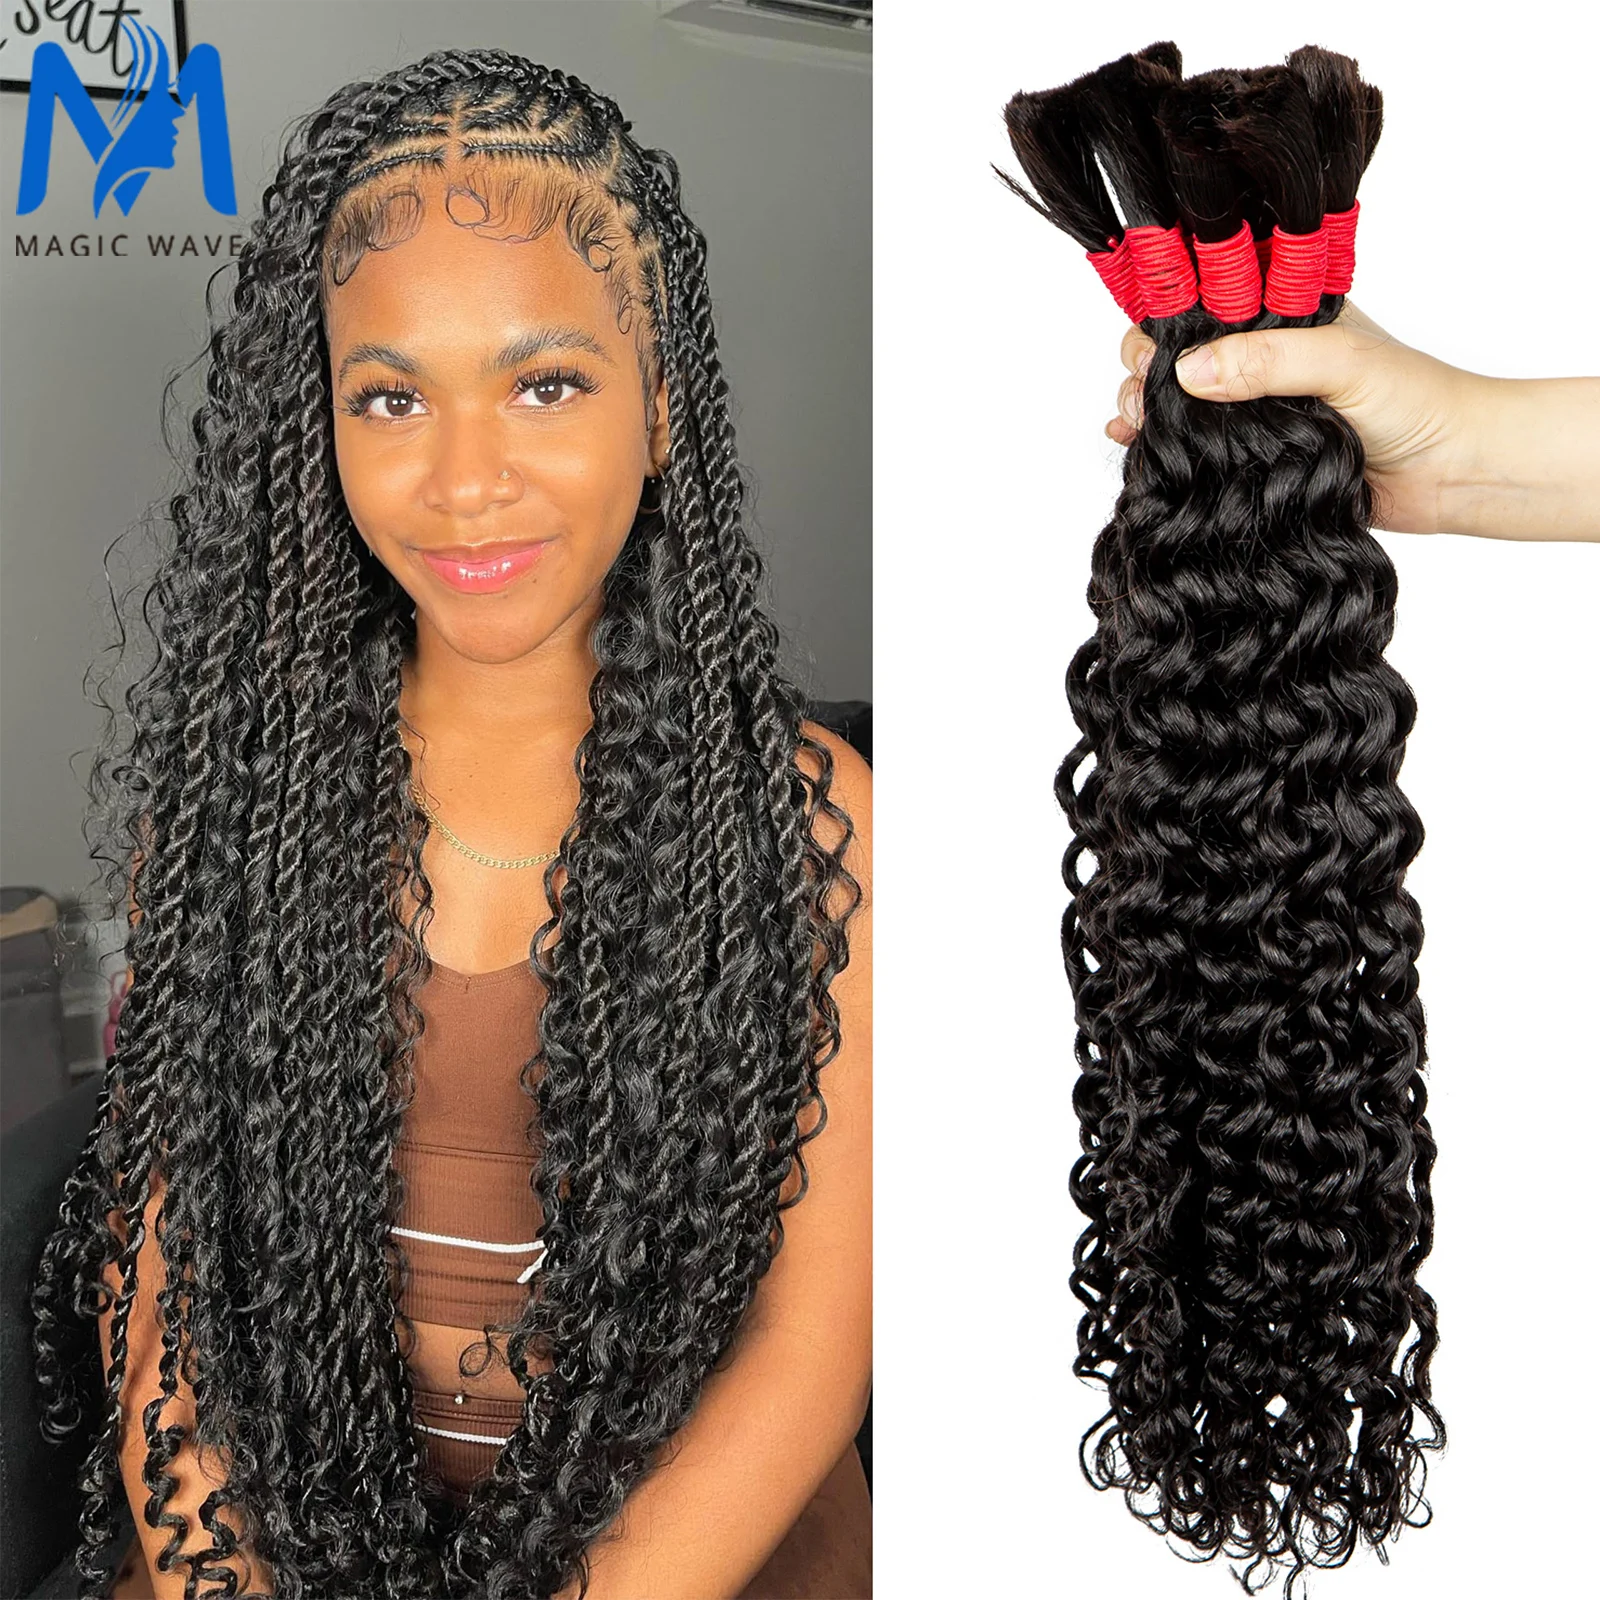 

No Weft Human Hair Bulk Extension Virgin Human Hair Water Wave Bulk Hair Weaving for Braiding 100% Unprocessed 16-26 Inches